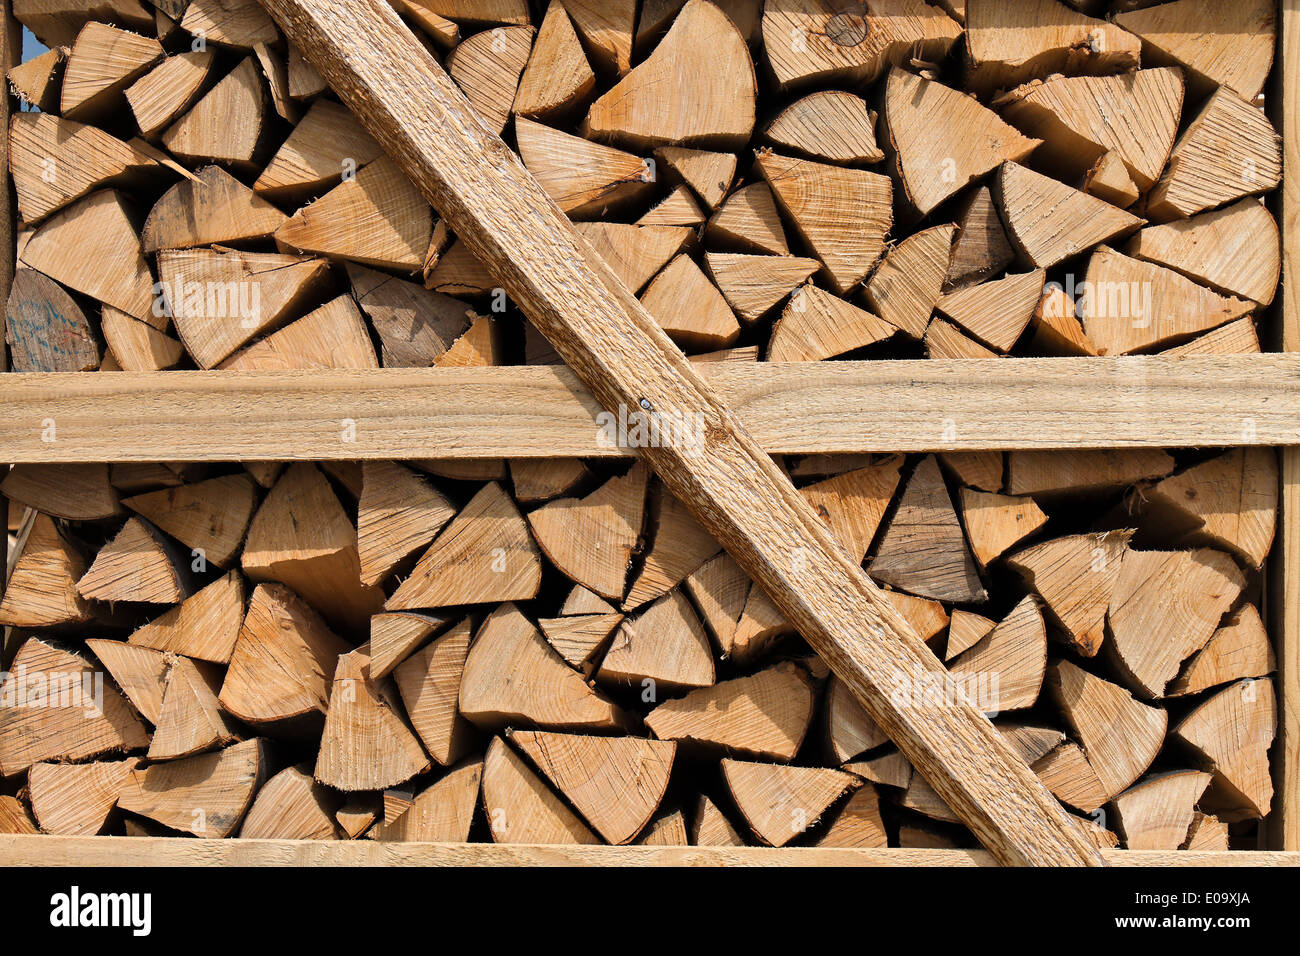 Un gran montón de madera para leña, Ein grosser Holz Stapel fuer Brennholz Foto de stock